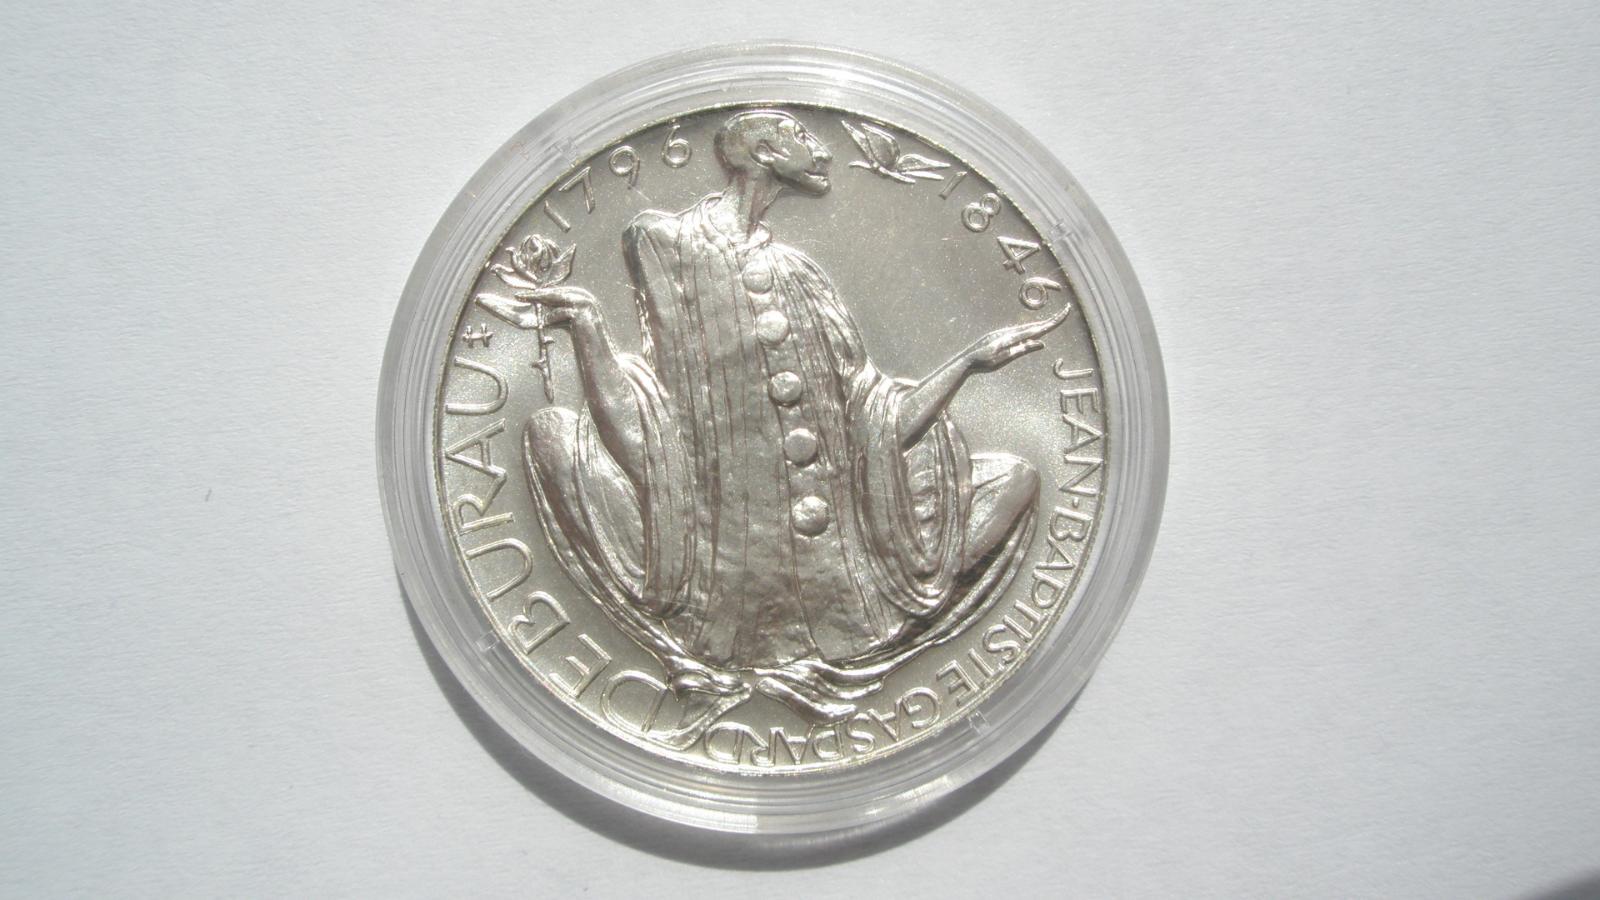 8,90 € Debure 1996 - Numizmatika